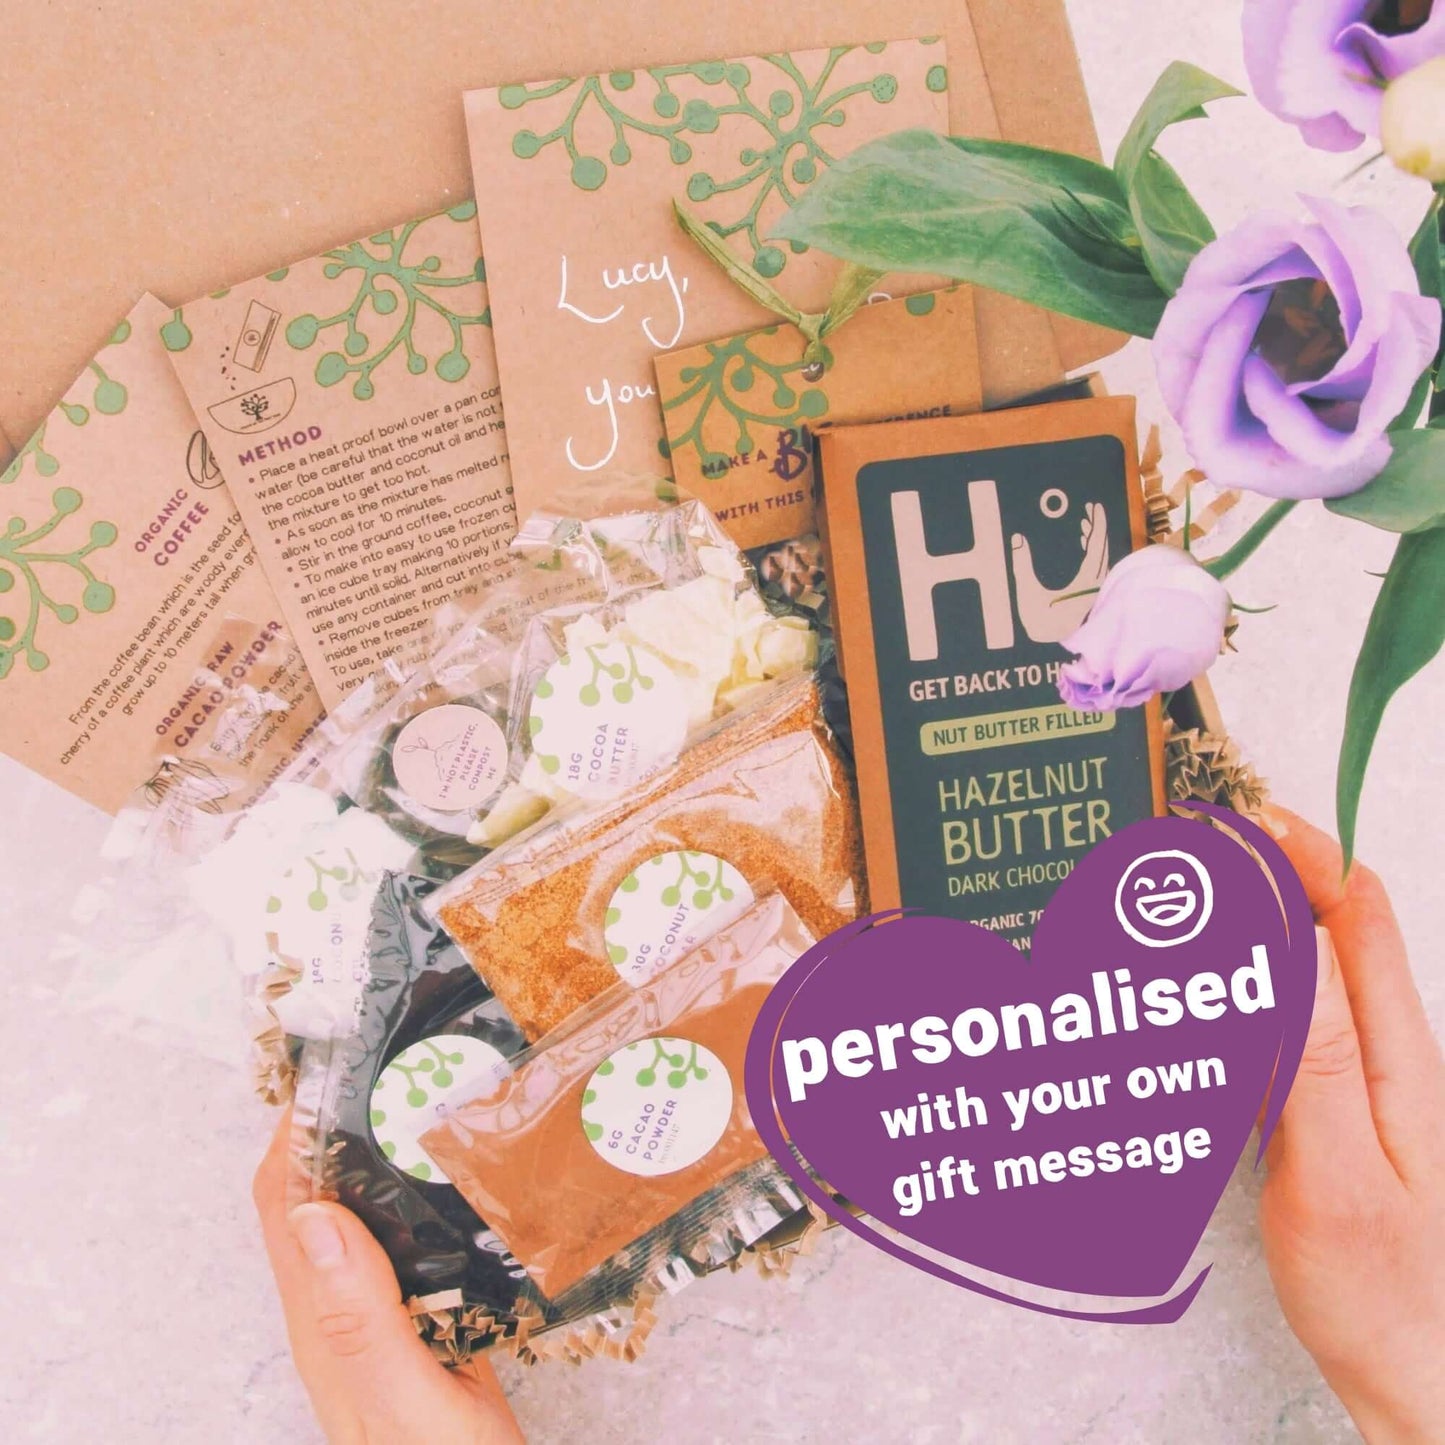 You Are Amazing Organic Vegan Chocolatey Pamper Letterbox Gift